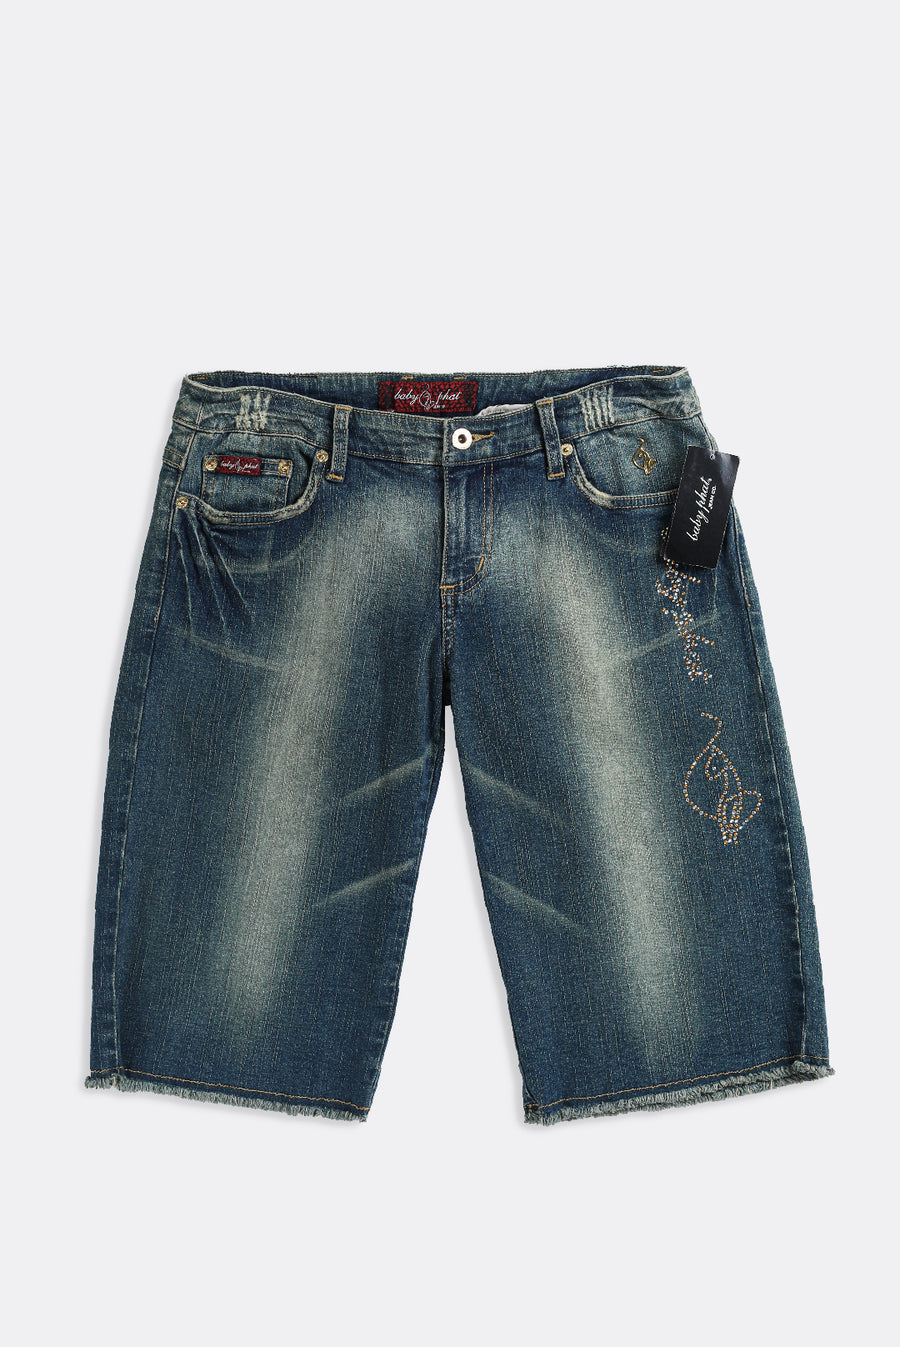 Deadstock Baby Phat Bedazzled Denim Shorts - W31, W33